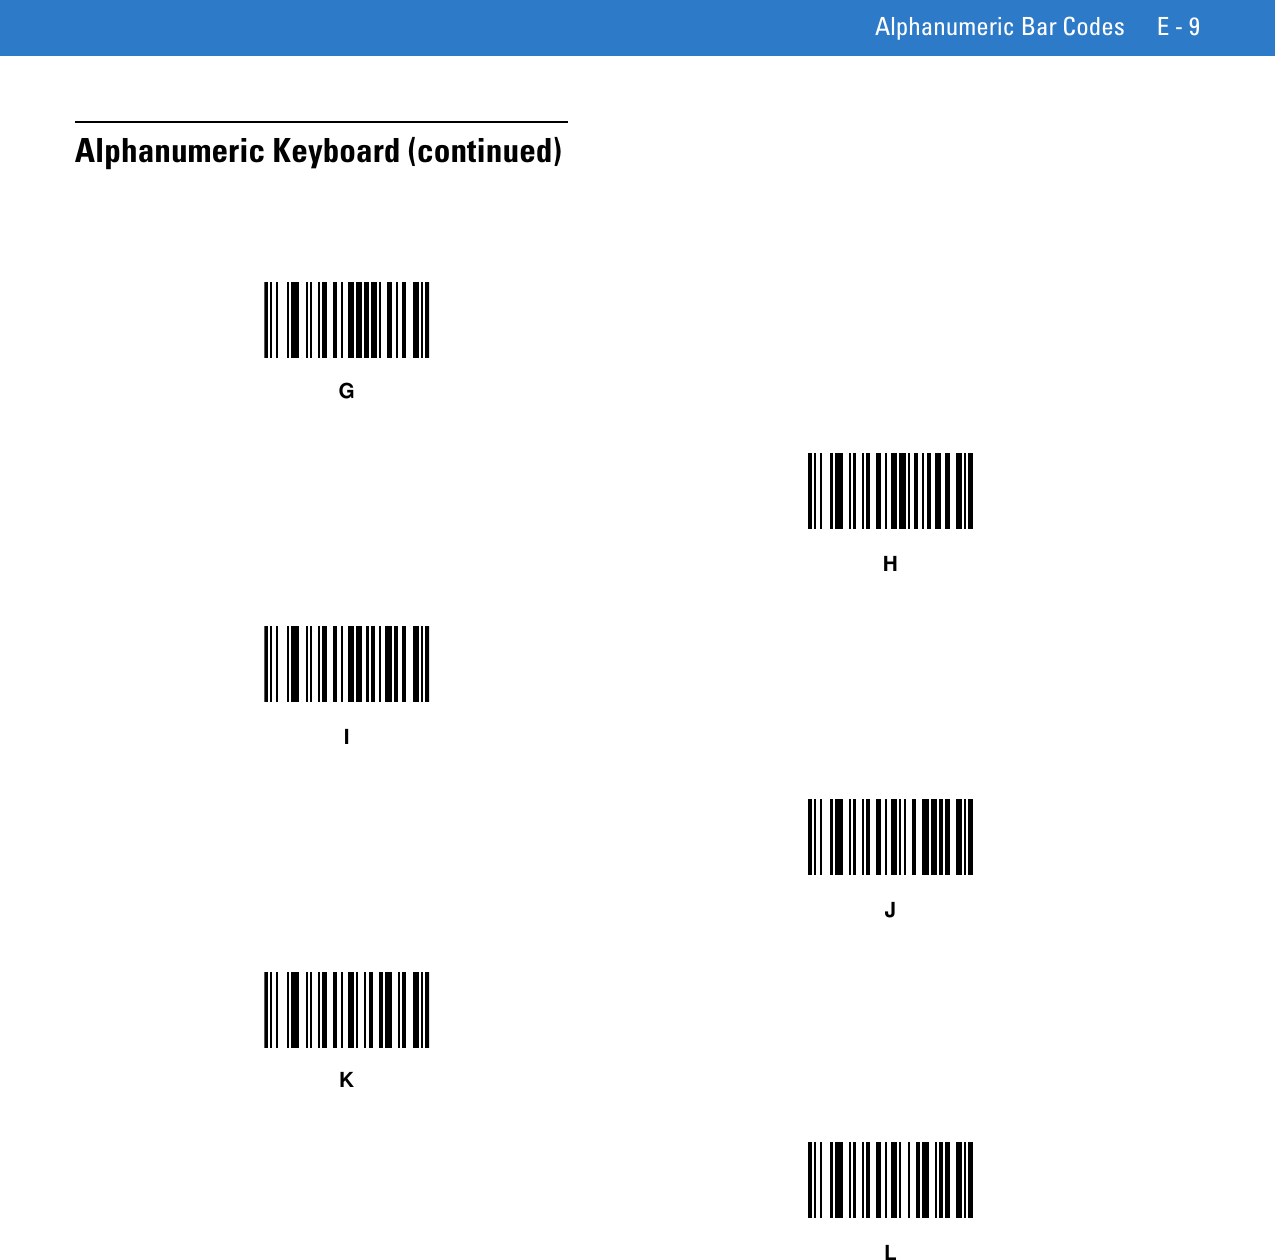 Alphanumeric Bar Codes E - 9Alphanumeric Keyboard (continued)GHIJKL